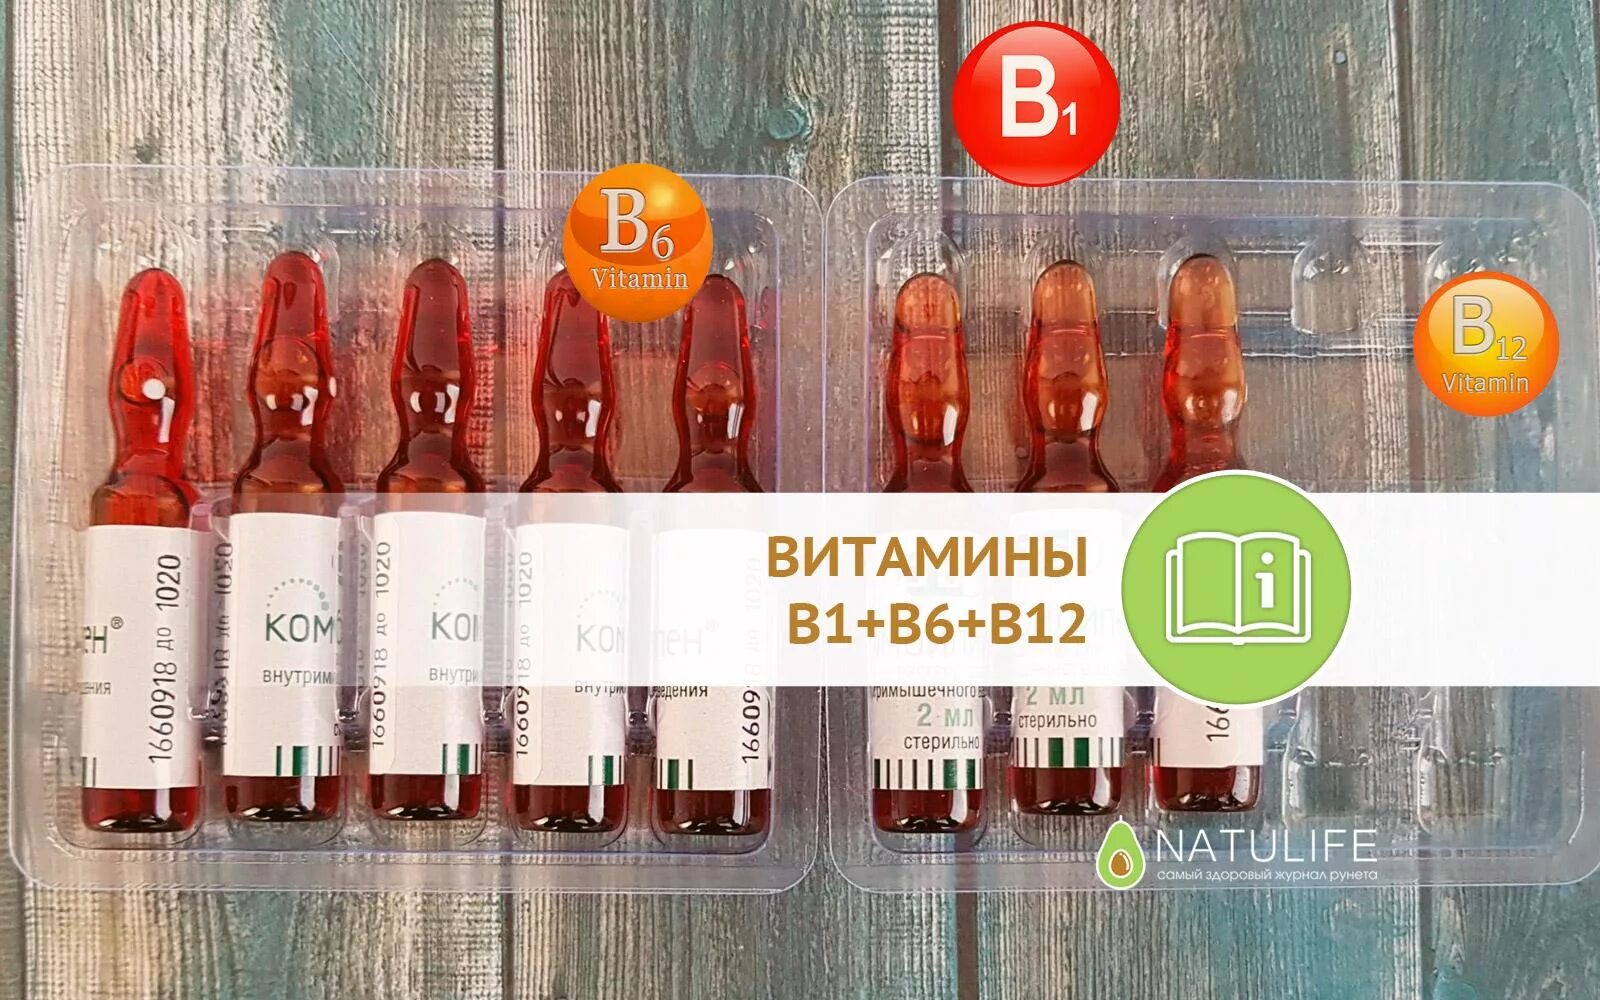 Витамин б 1 уколы. Витамины б1 б6 уколы. Комплекс витаминов б1 б6 б12 в ампулах. B1 b6 b12 витамины в ампулах JN pfgjz. Комплекс б1 б6 б12 уколы витамины.